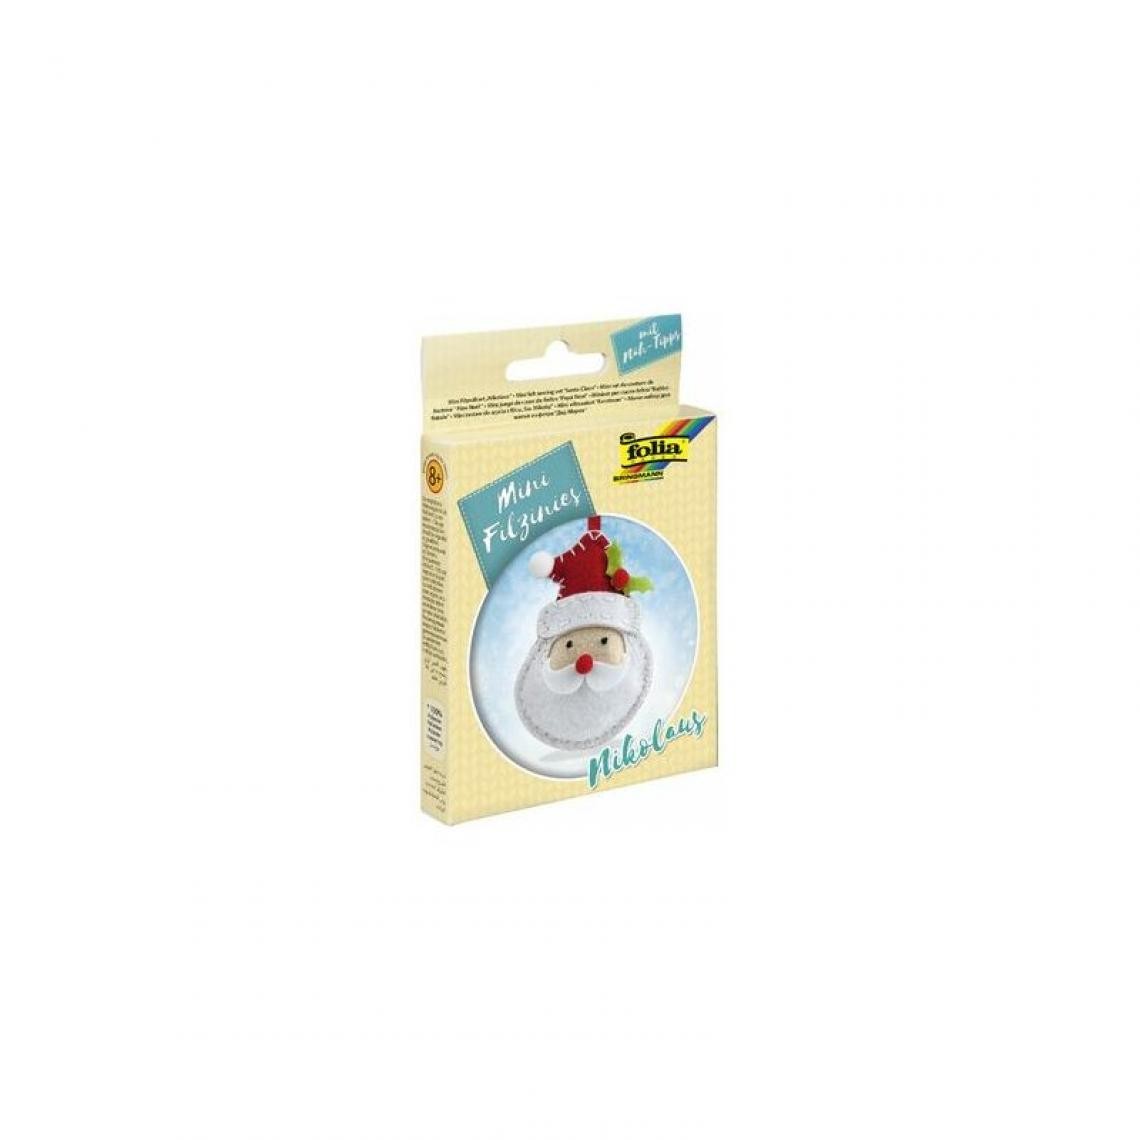 Folia - folia Mini kit de feutrine 'Filzinies', sapin de Noël () - Bricolage et jardinage